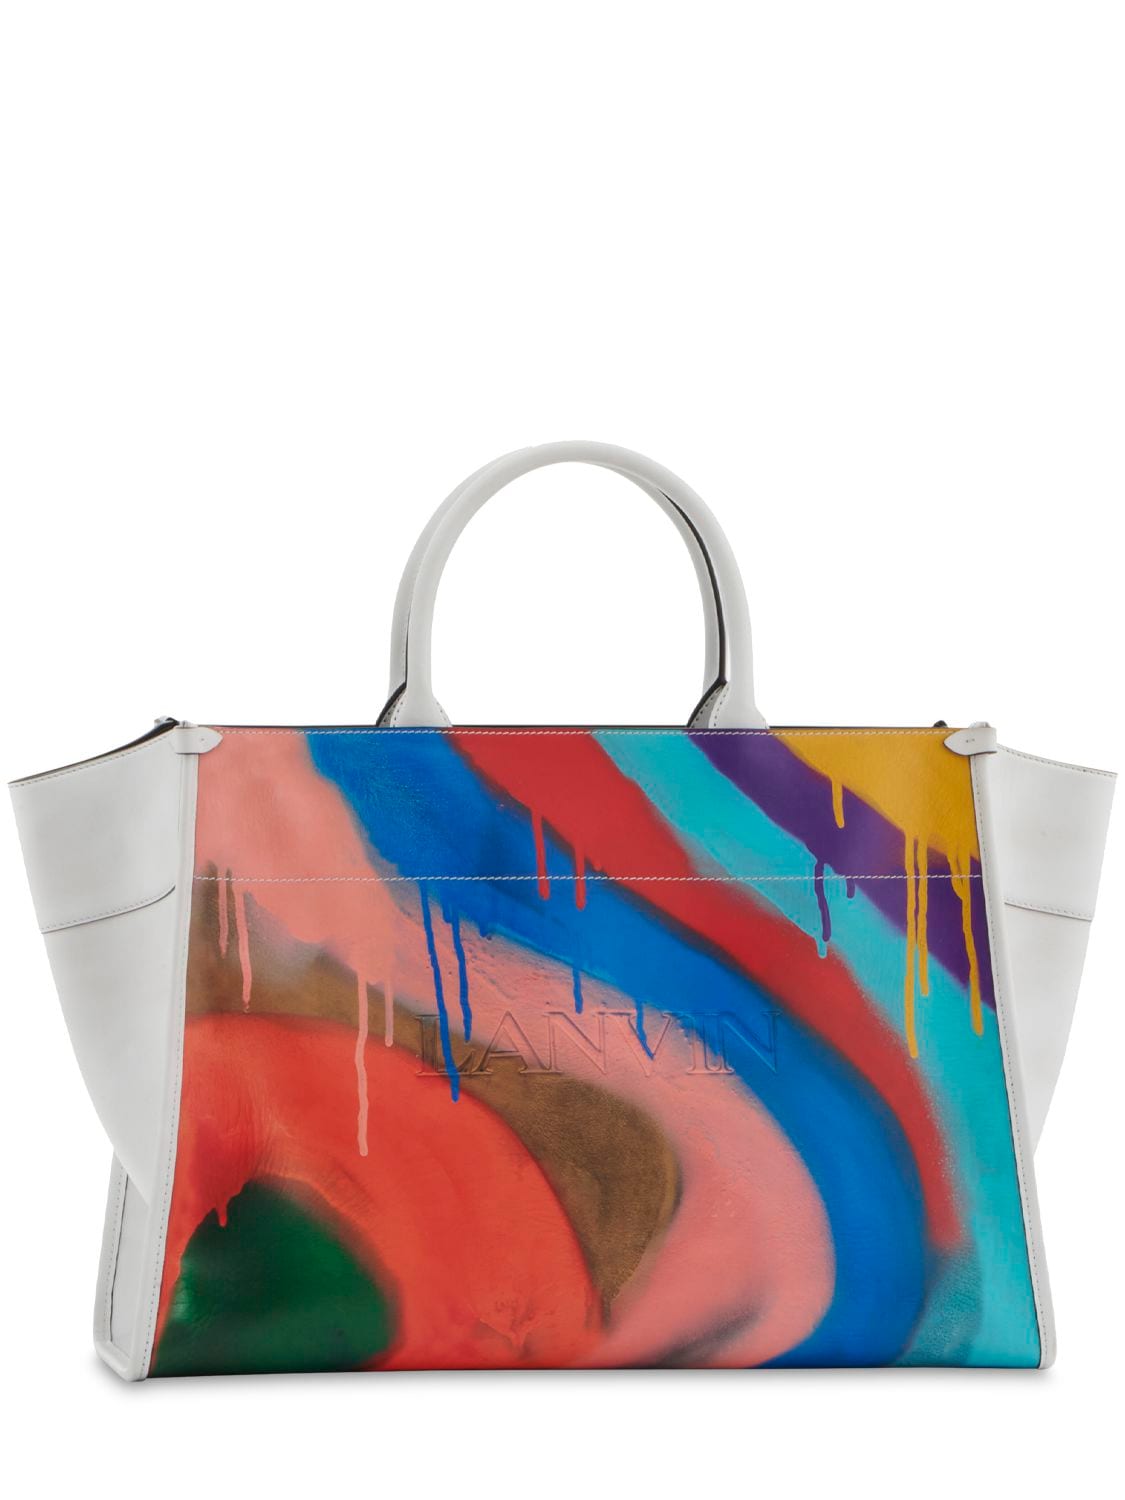 Gallery Dept X Lanvin - Cabas medium size leather tote bag 